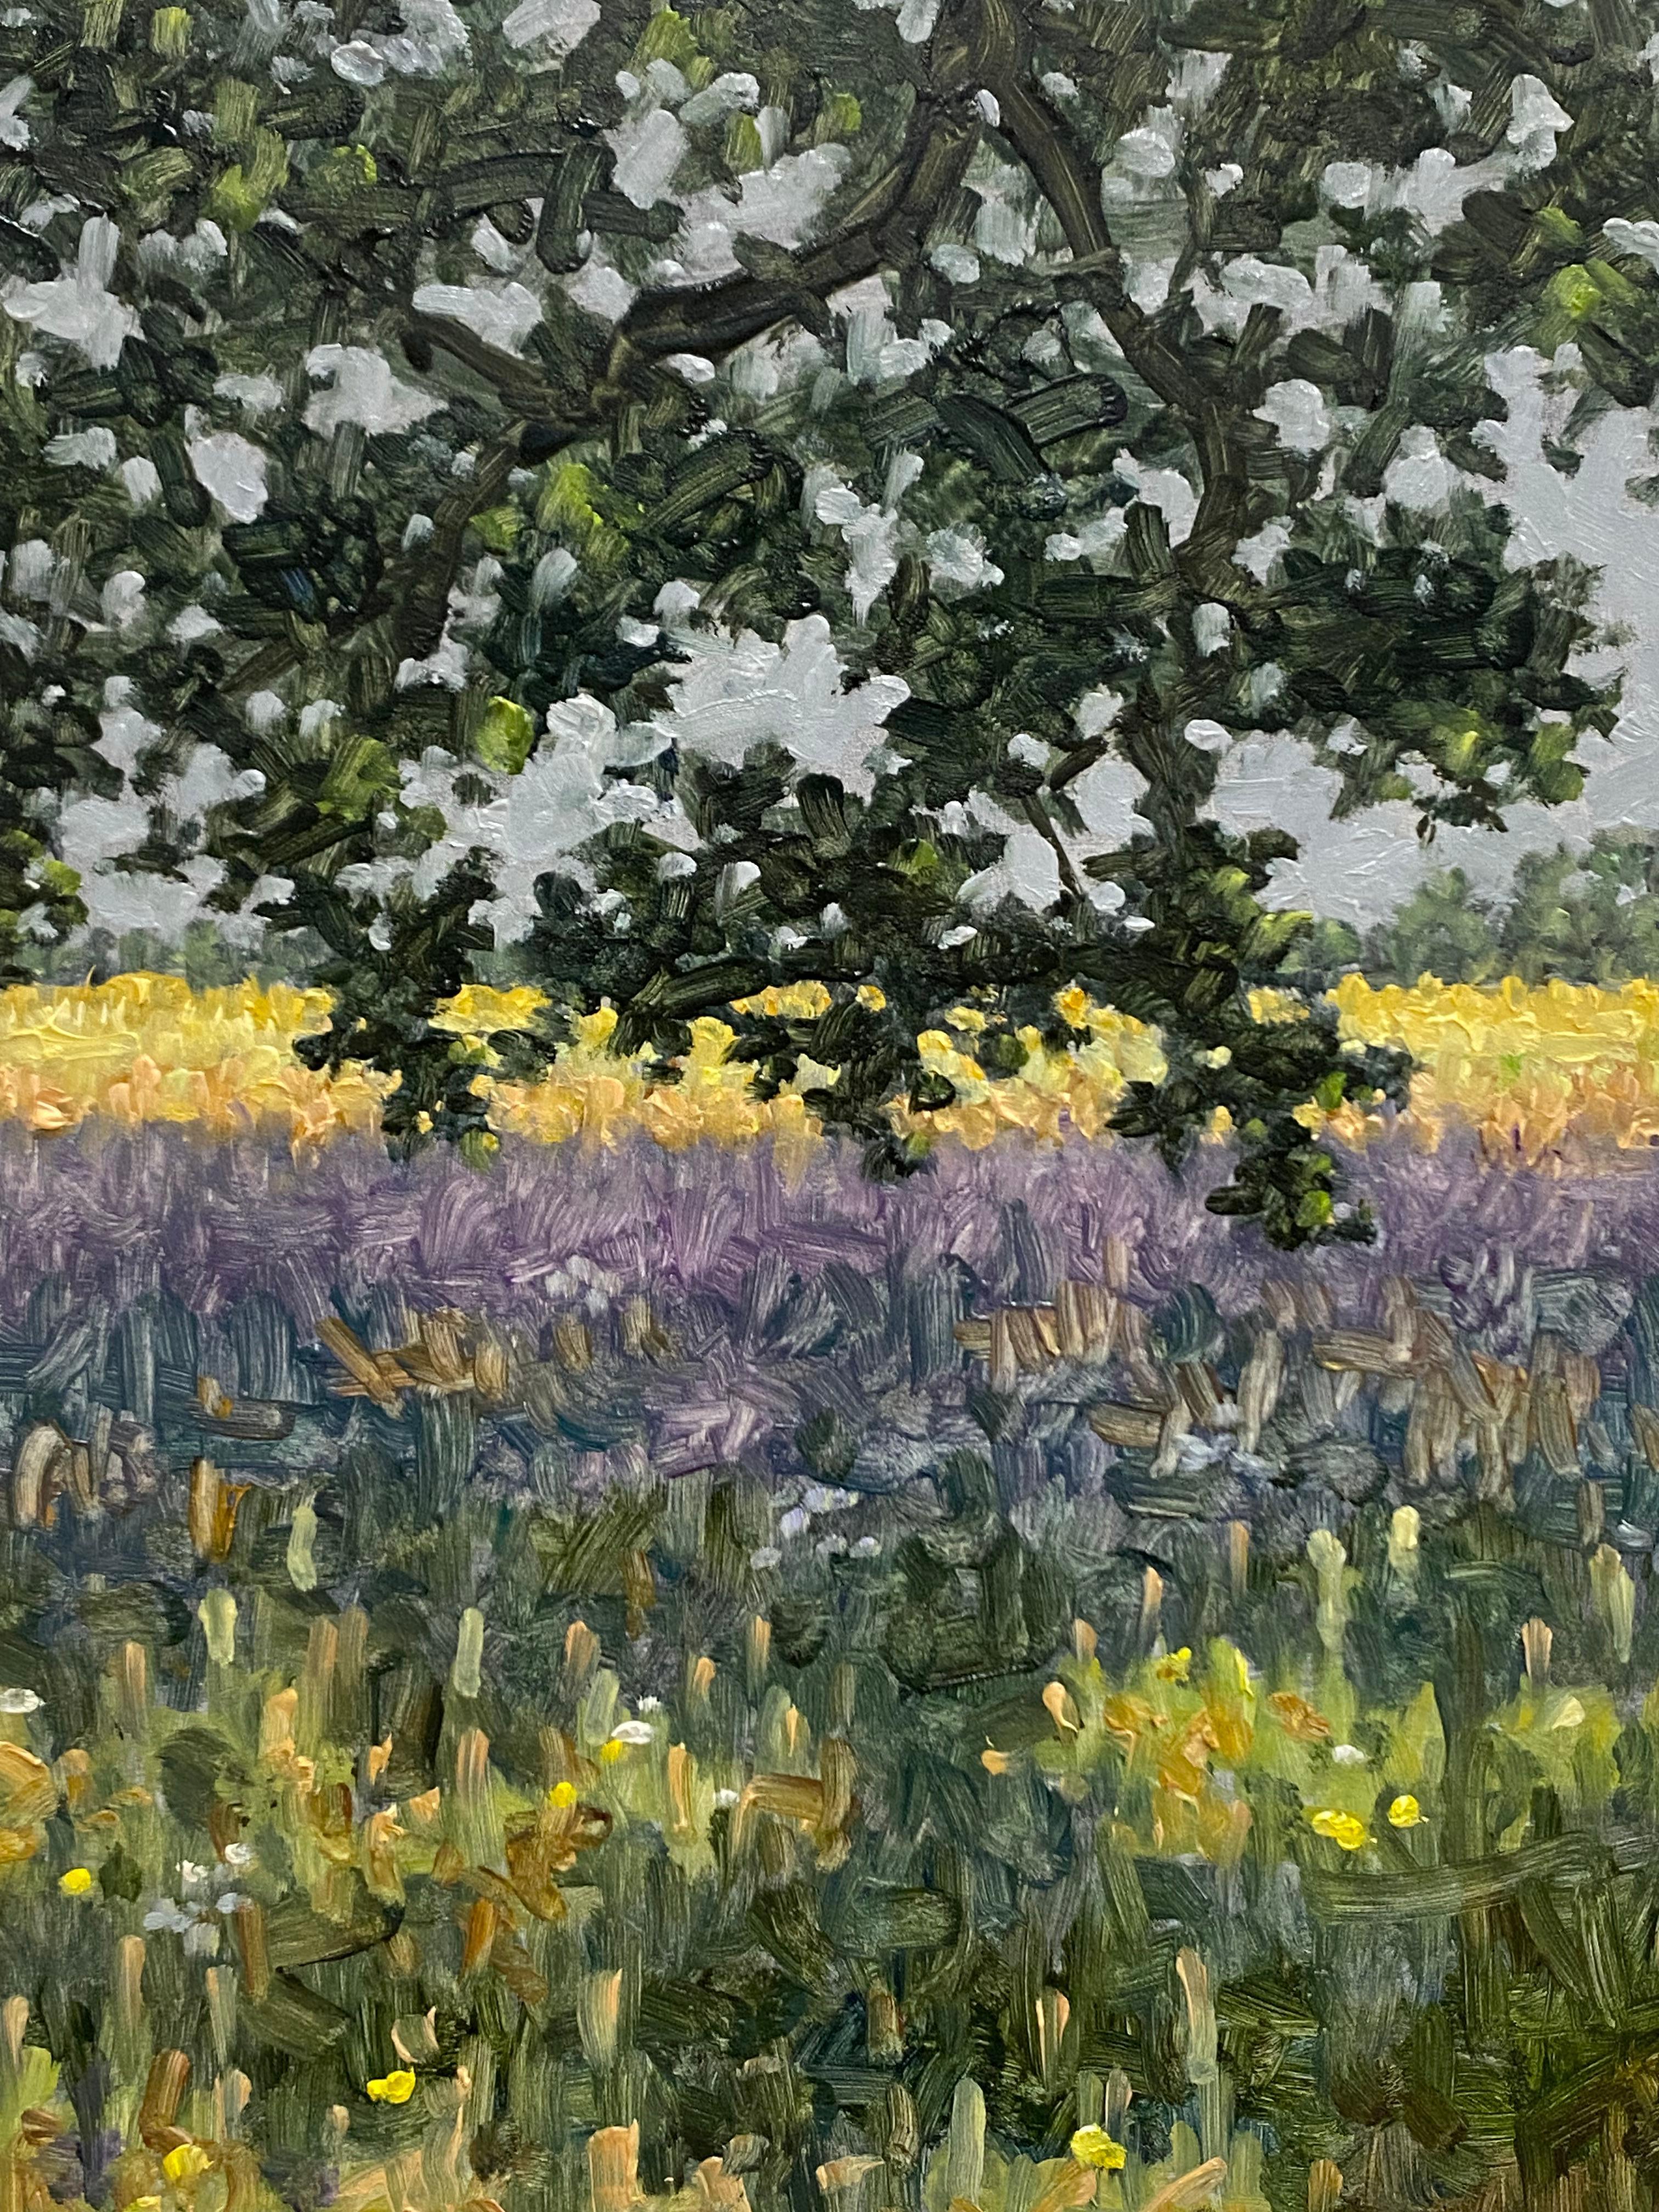 Field Painting June 30 2022, Green Tree, Golden Grass, Purple Lavender Flowers - Gray Landscape Painting by Thomas Sarrantonio